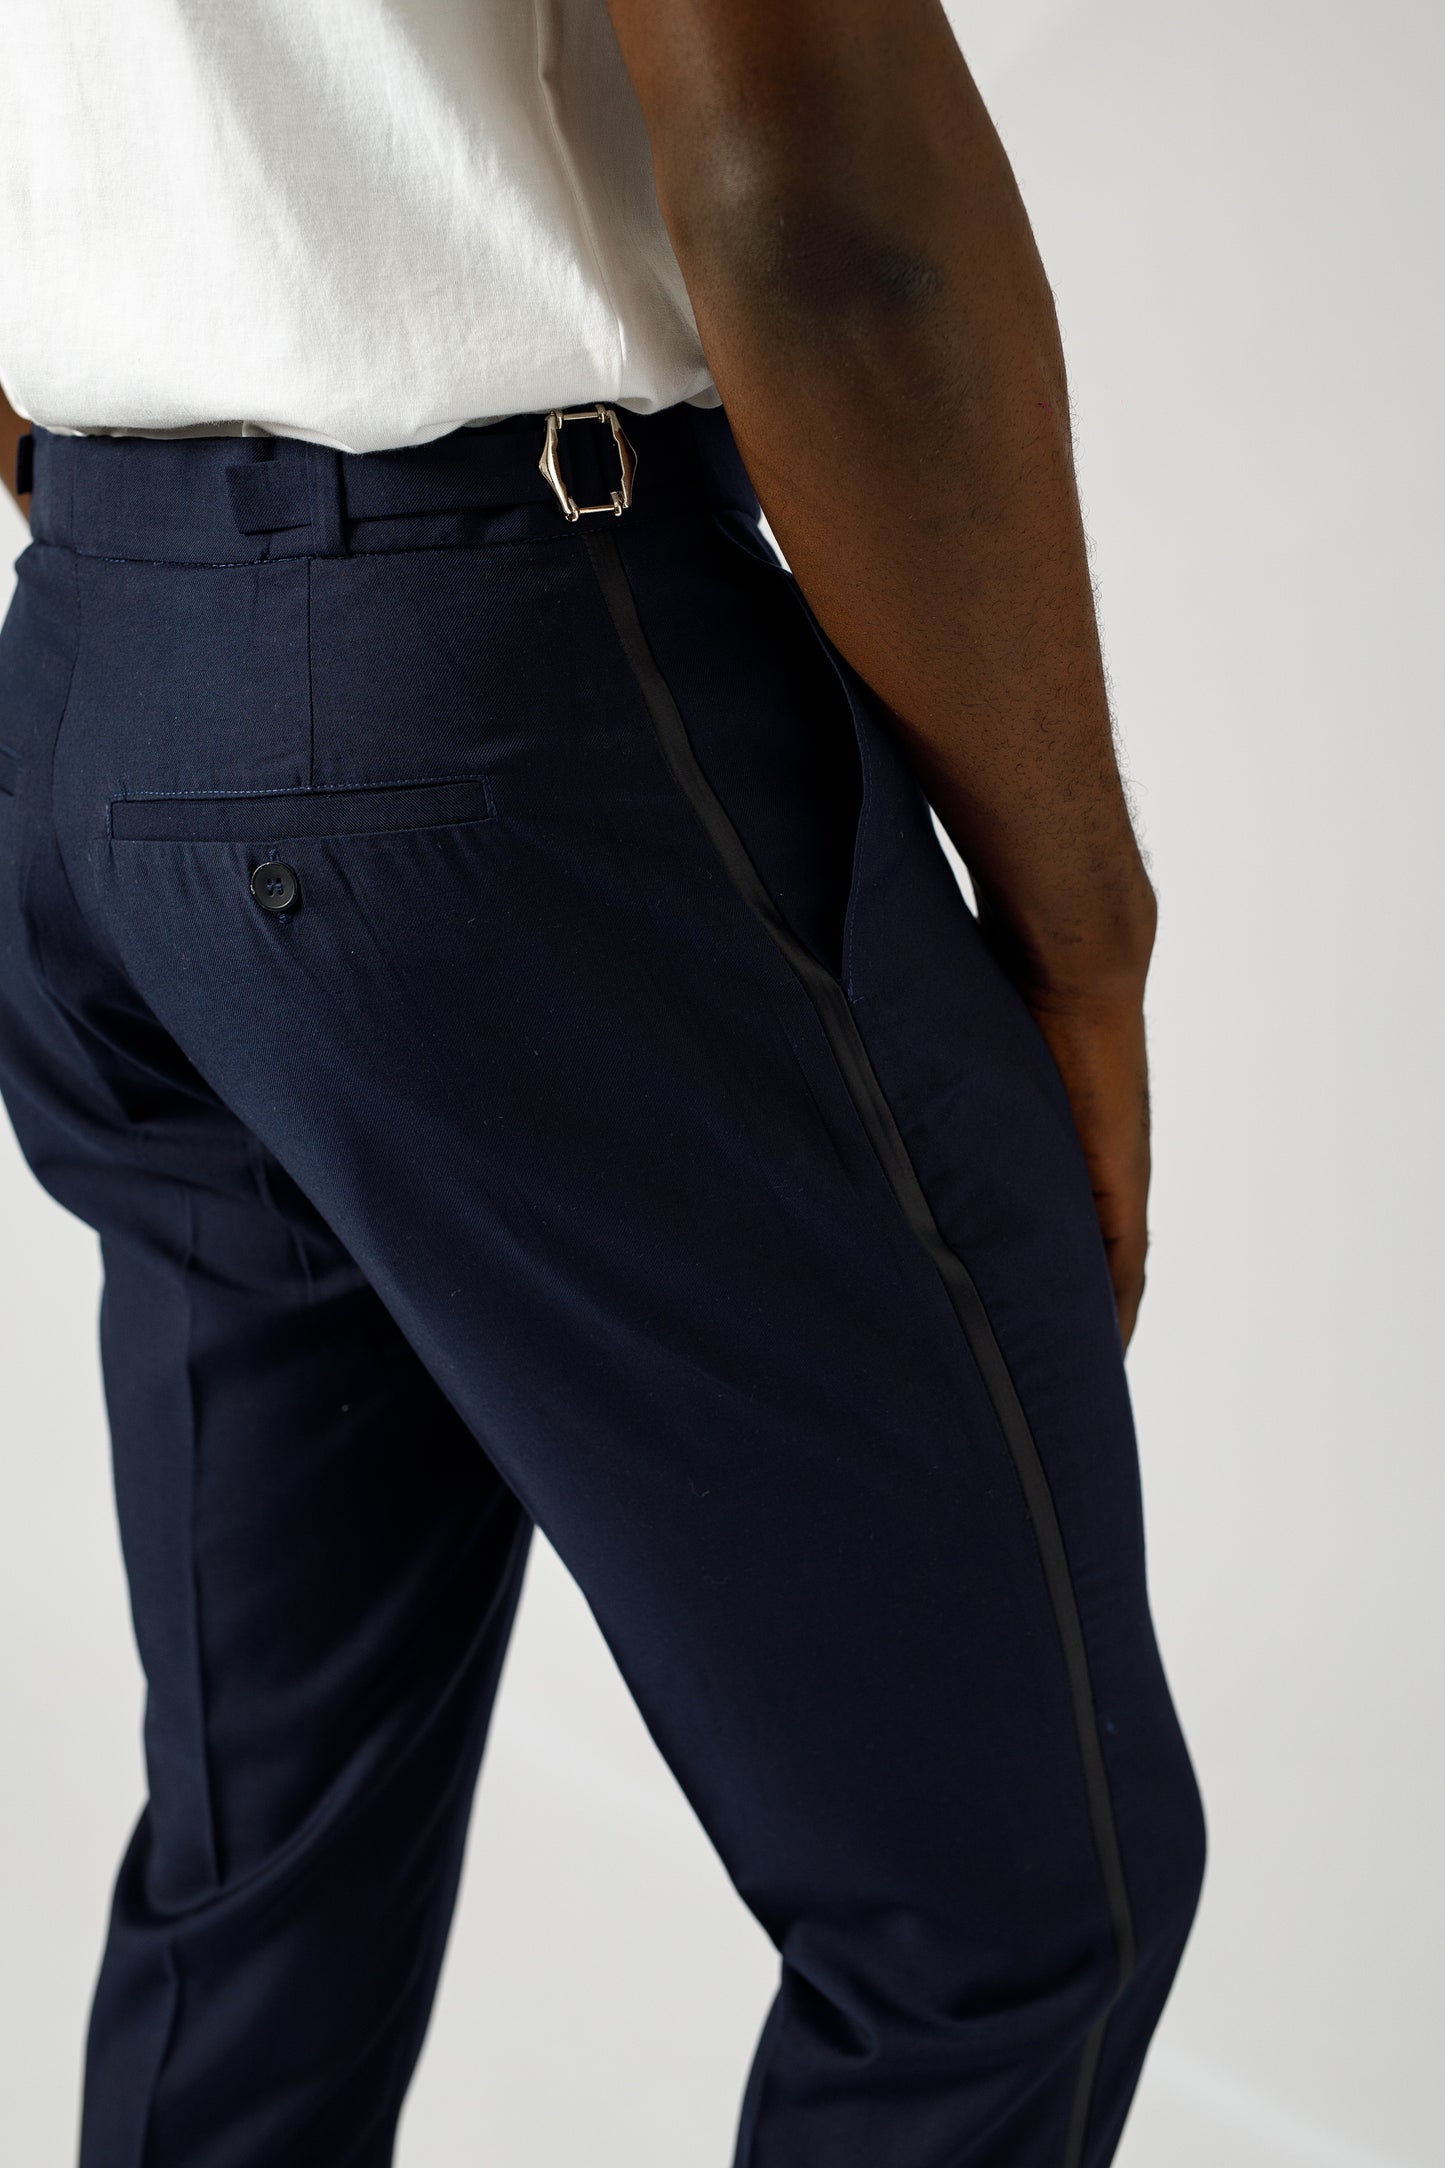 Navy blue tux pant